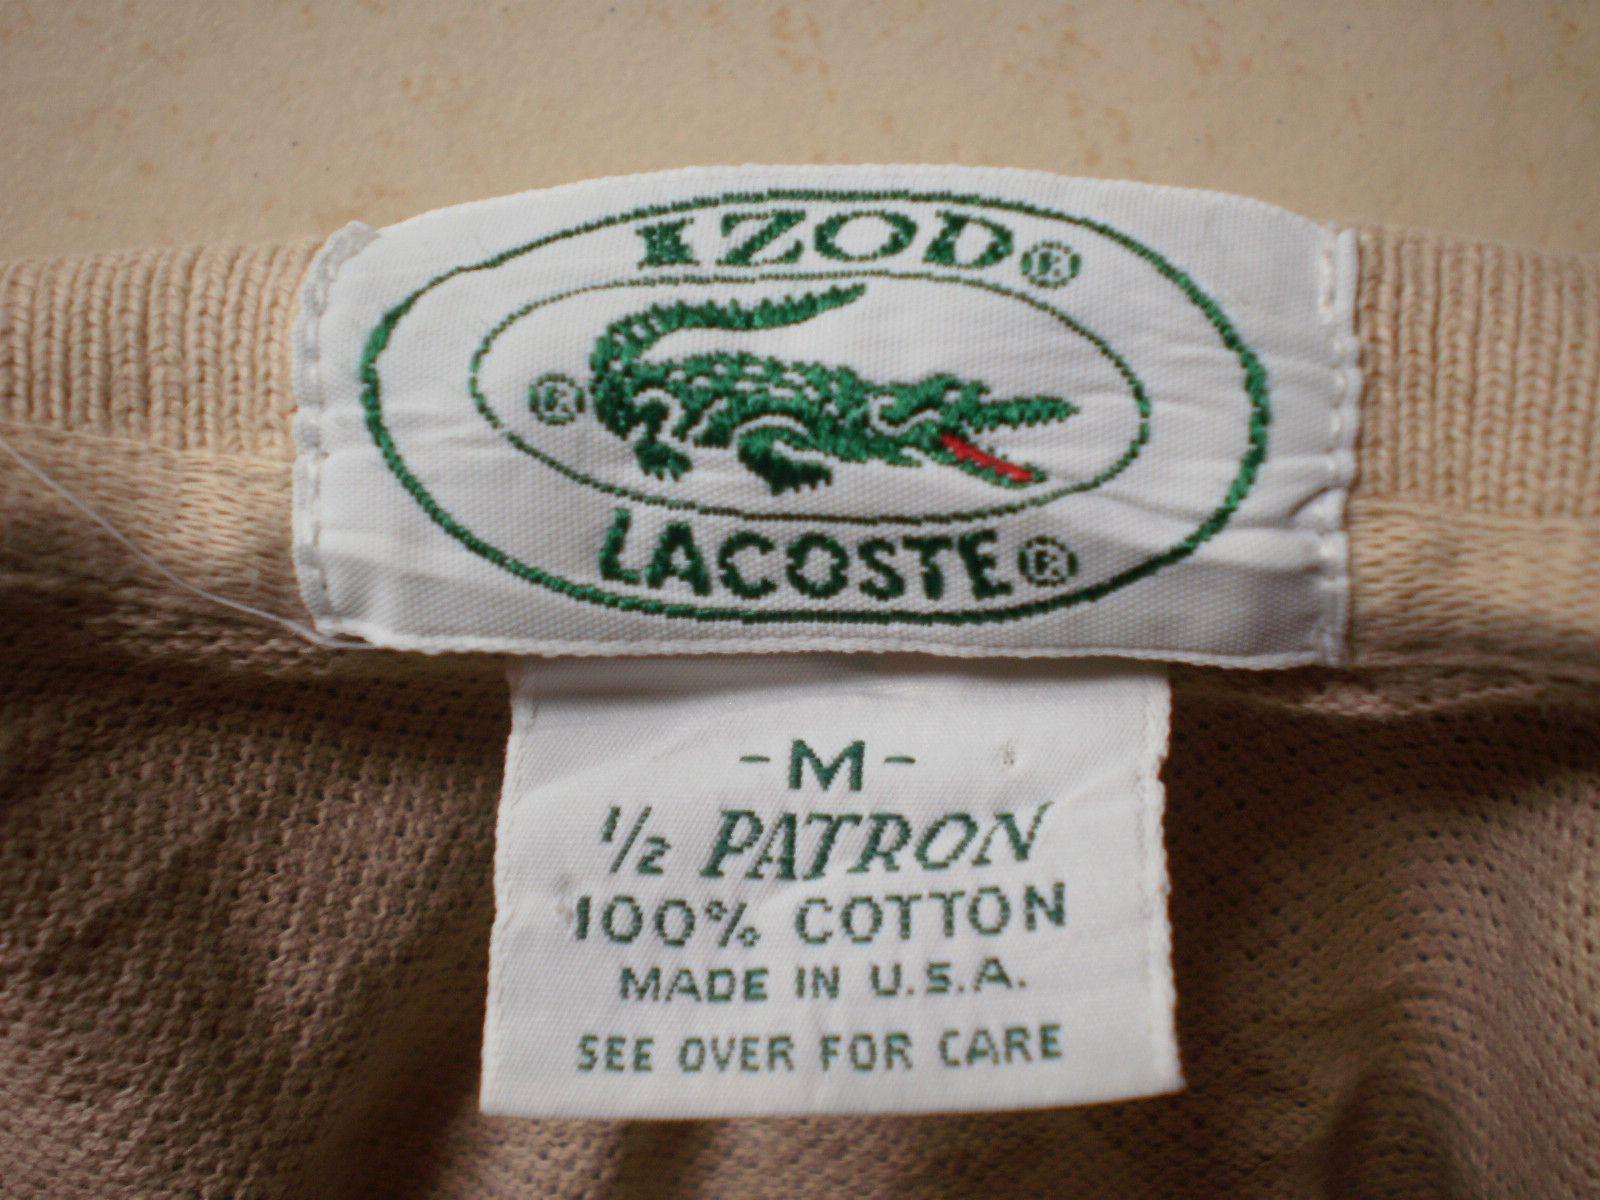 Old Izod Logo - Izod Lacoste 1/2 Patron Made in USA (Sold) | CariBundle